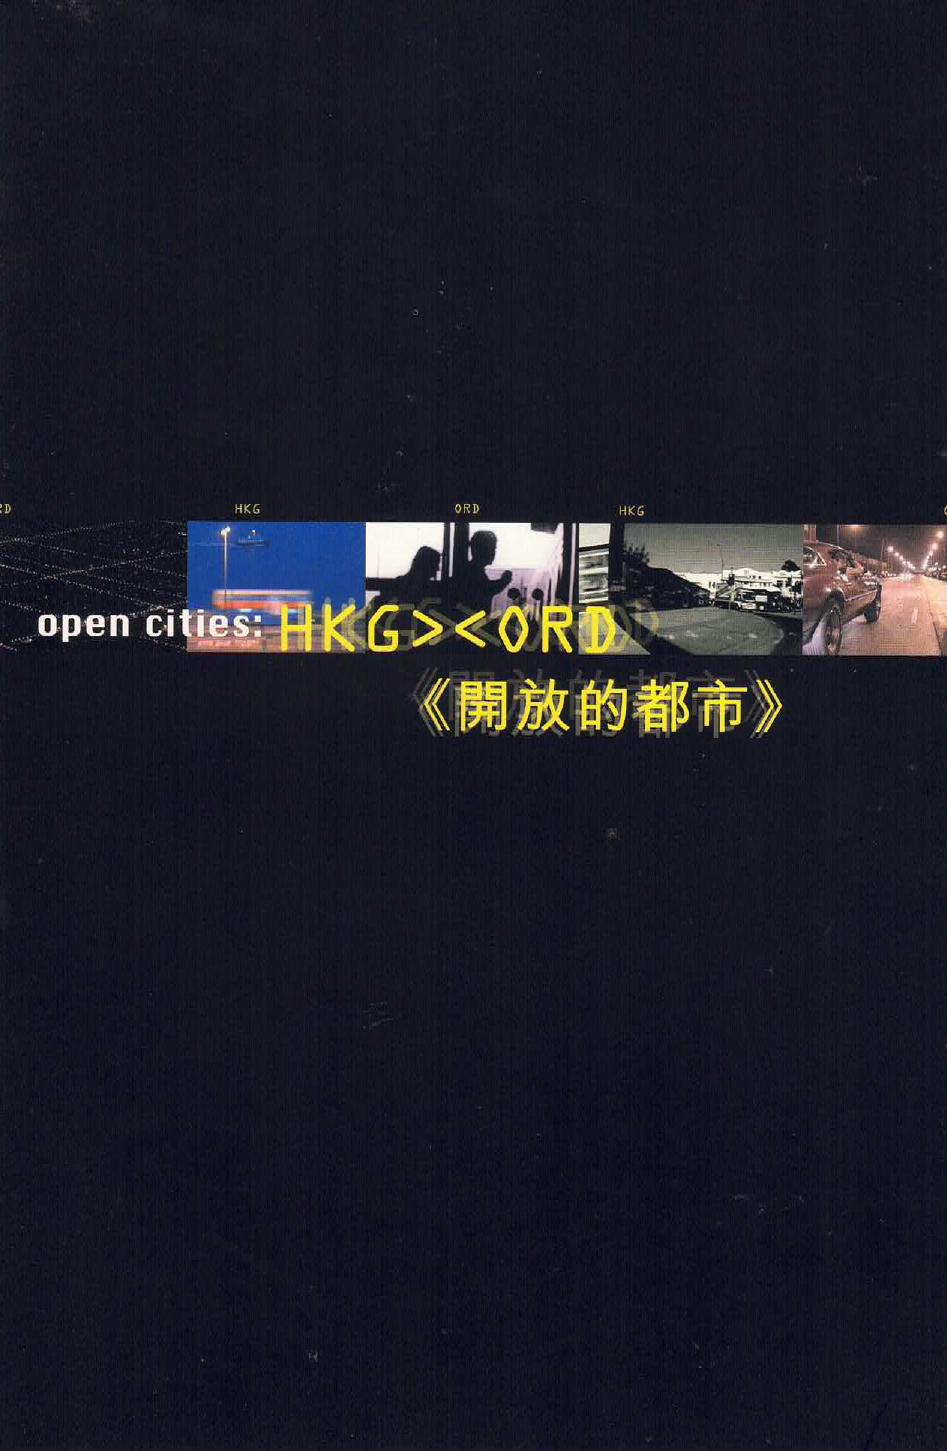 Open Cities: HKG ORD – Brochure 《開放的都市》- 小冊子